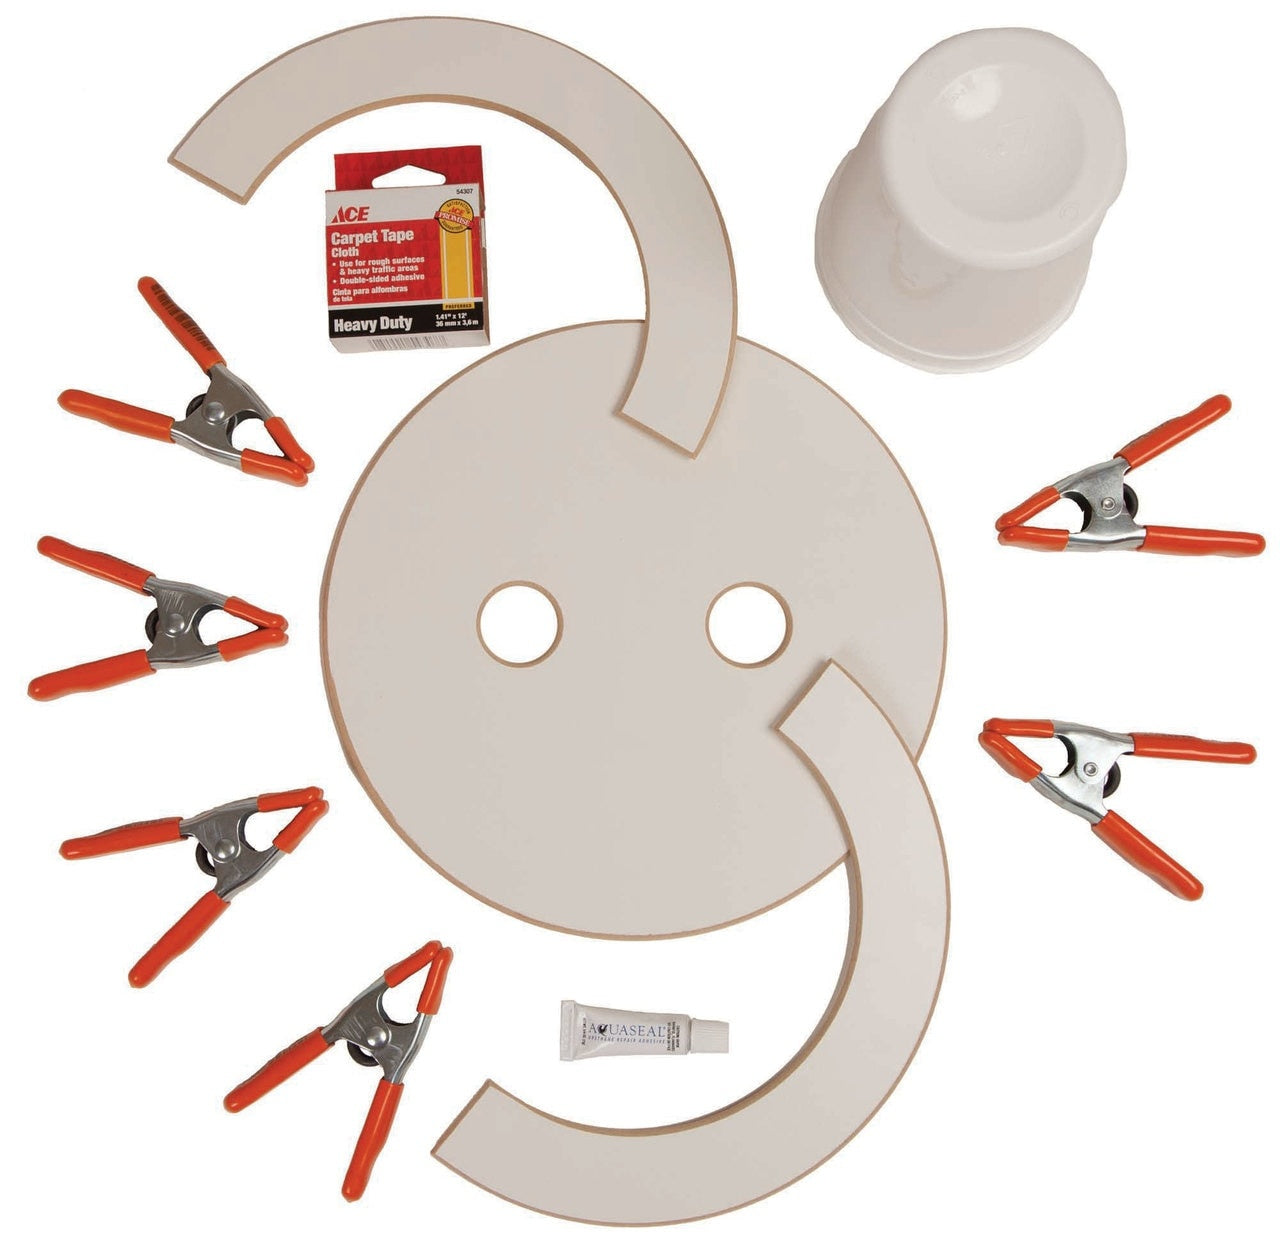 Kokatat - Neck Gasket Tool Repair Kit